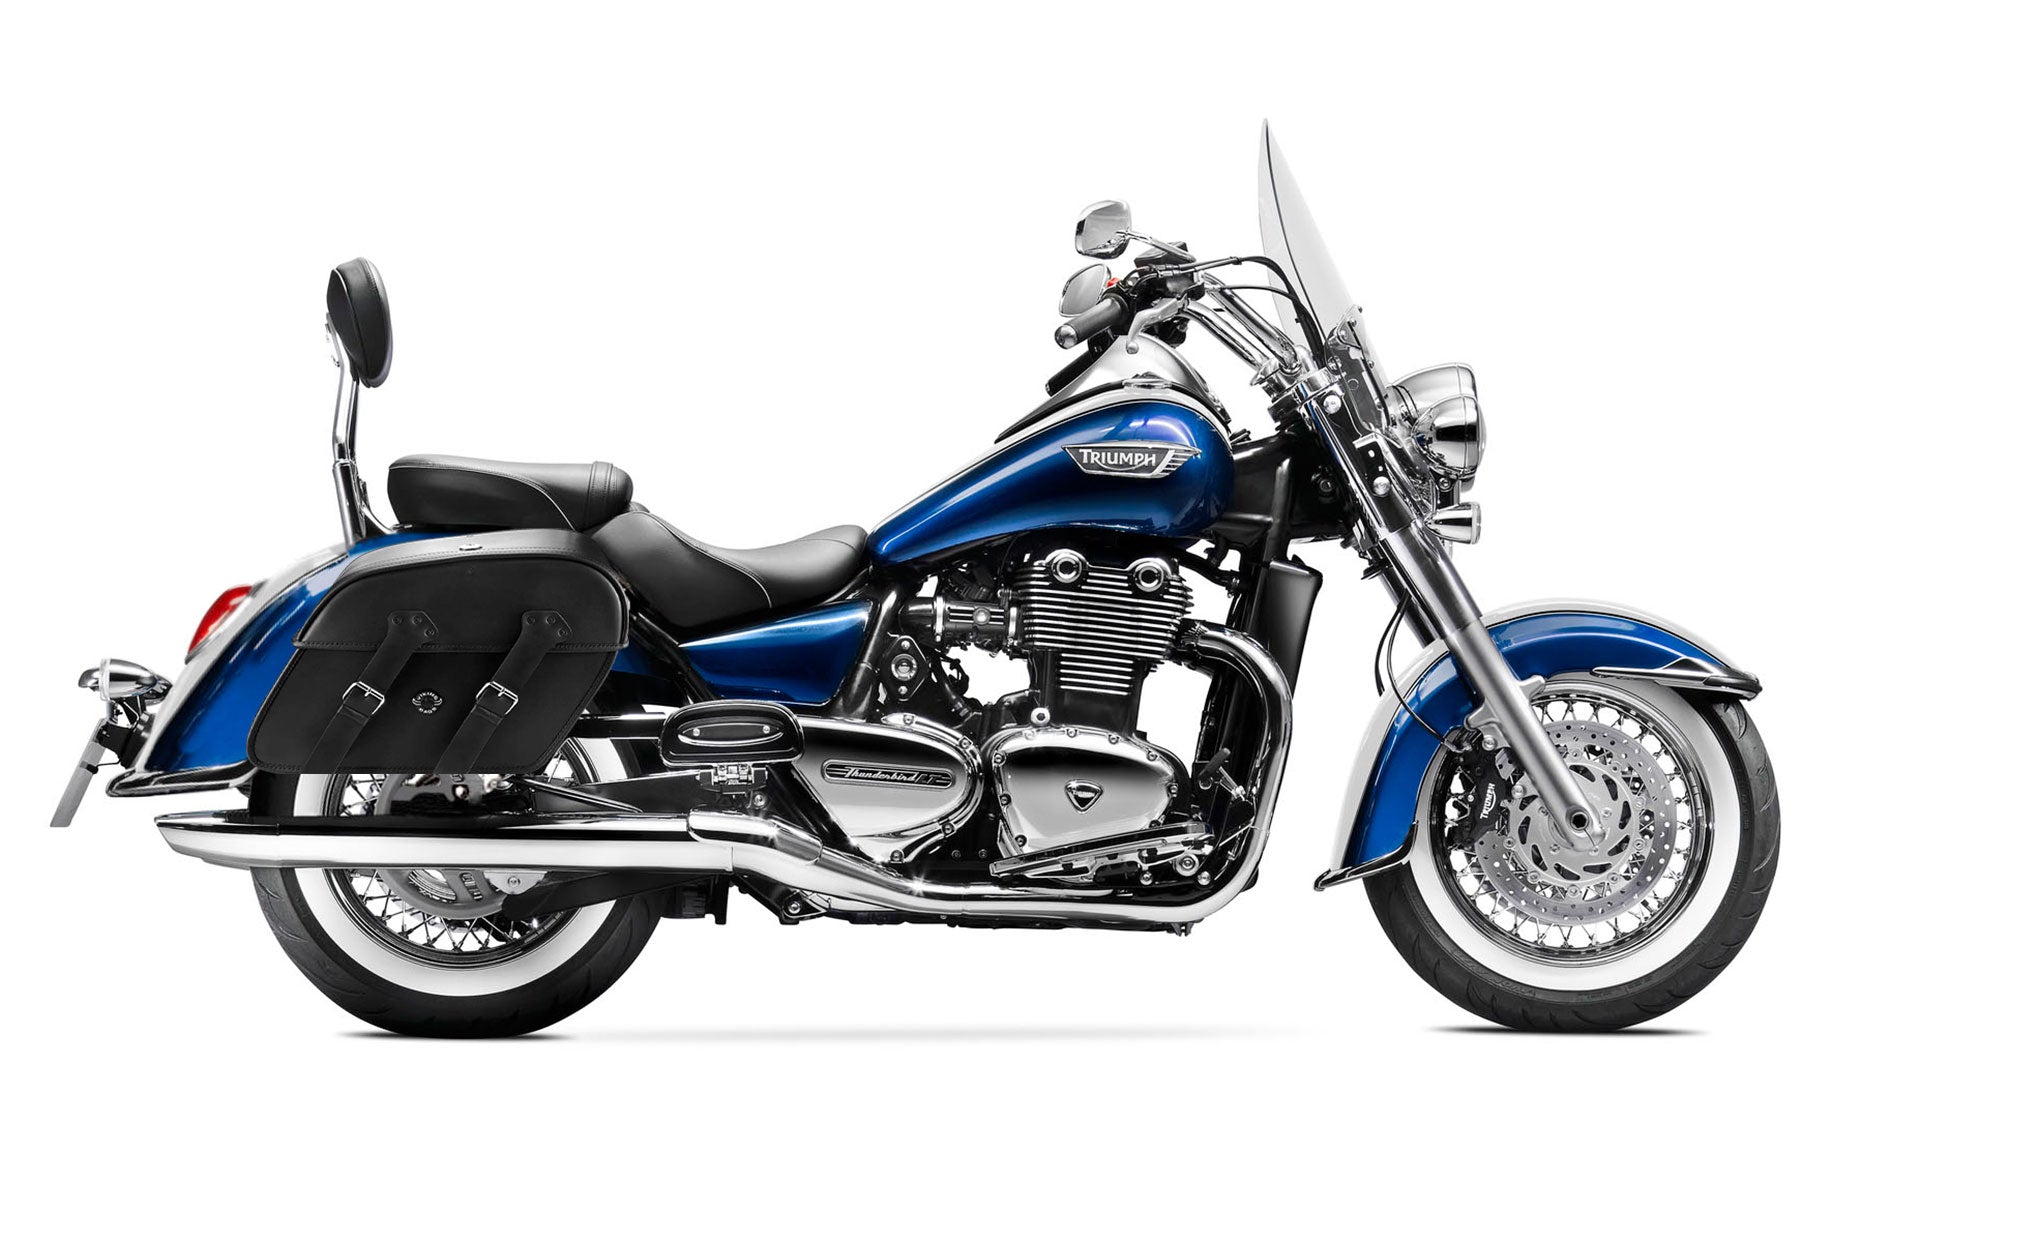 Viking Raven Extra Large Triumph Thunderbird Lt Shock Cut Out Leather Motorcycle Saddlebags on Bike Photo @expand